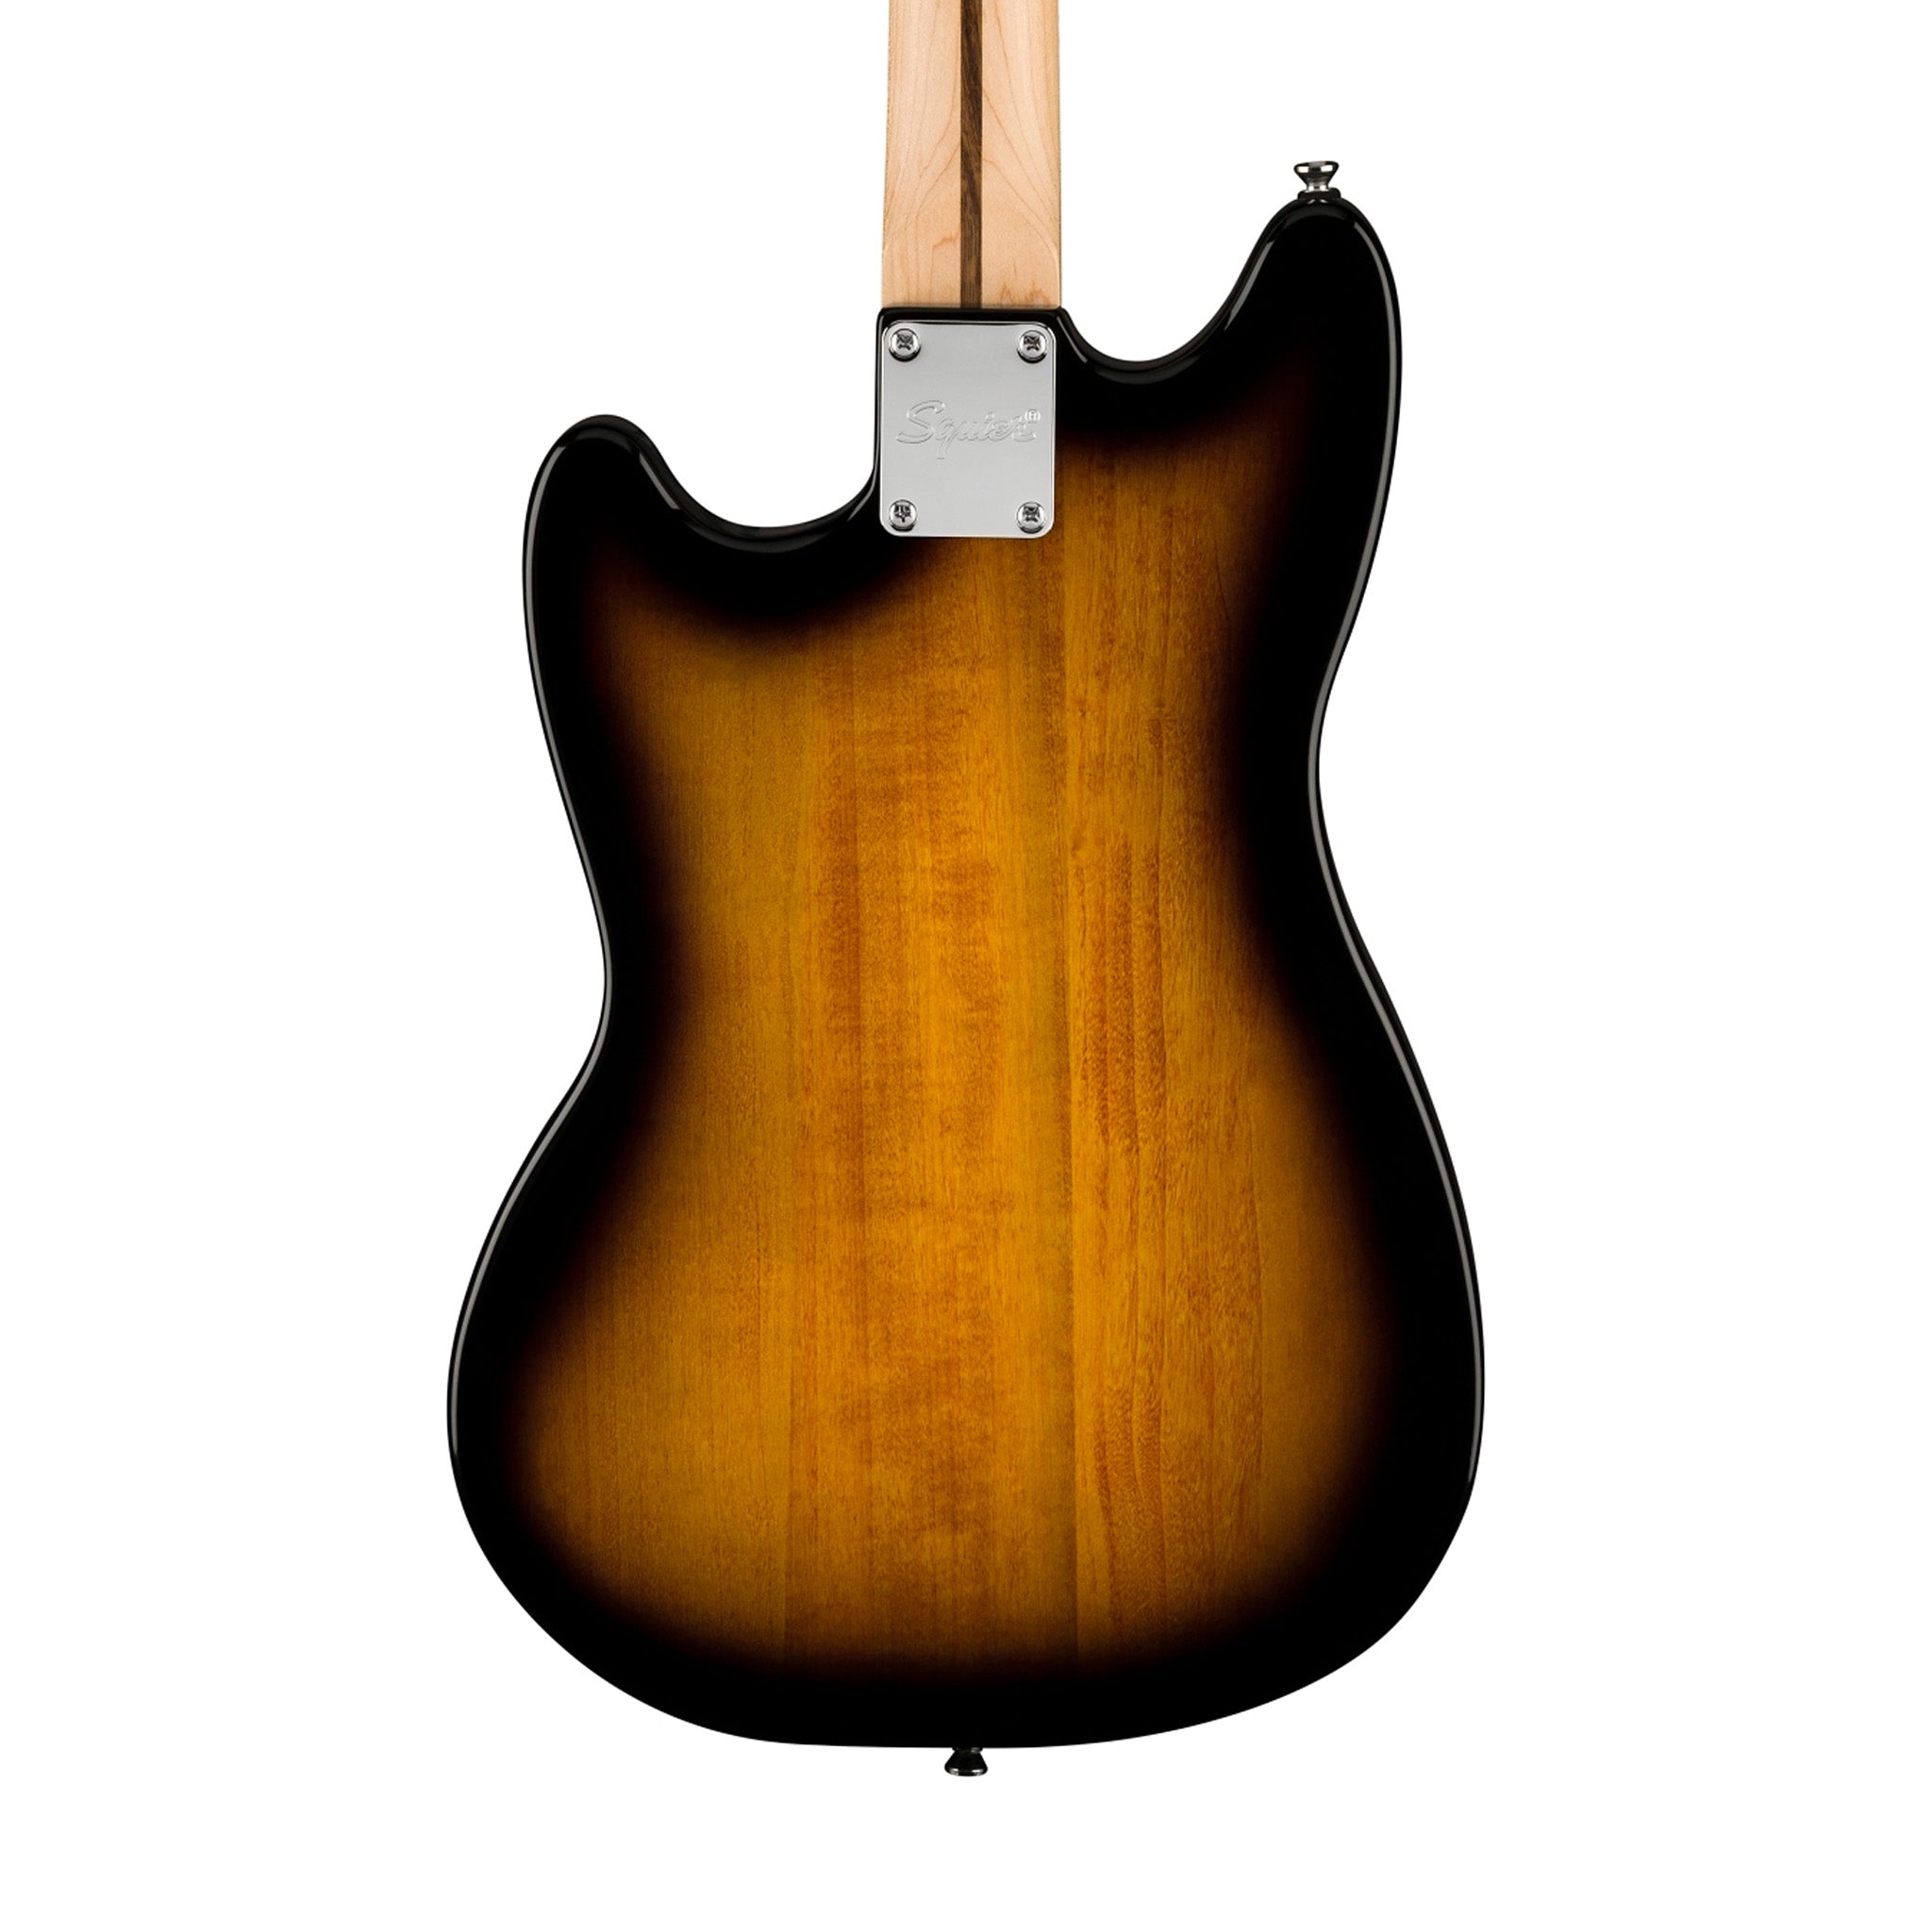 Squier Sonic Mustang Electric Guitar w/White Pickguard, Maple FB, 2-Color Sunburst